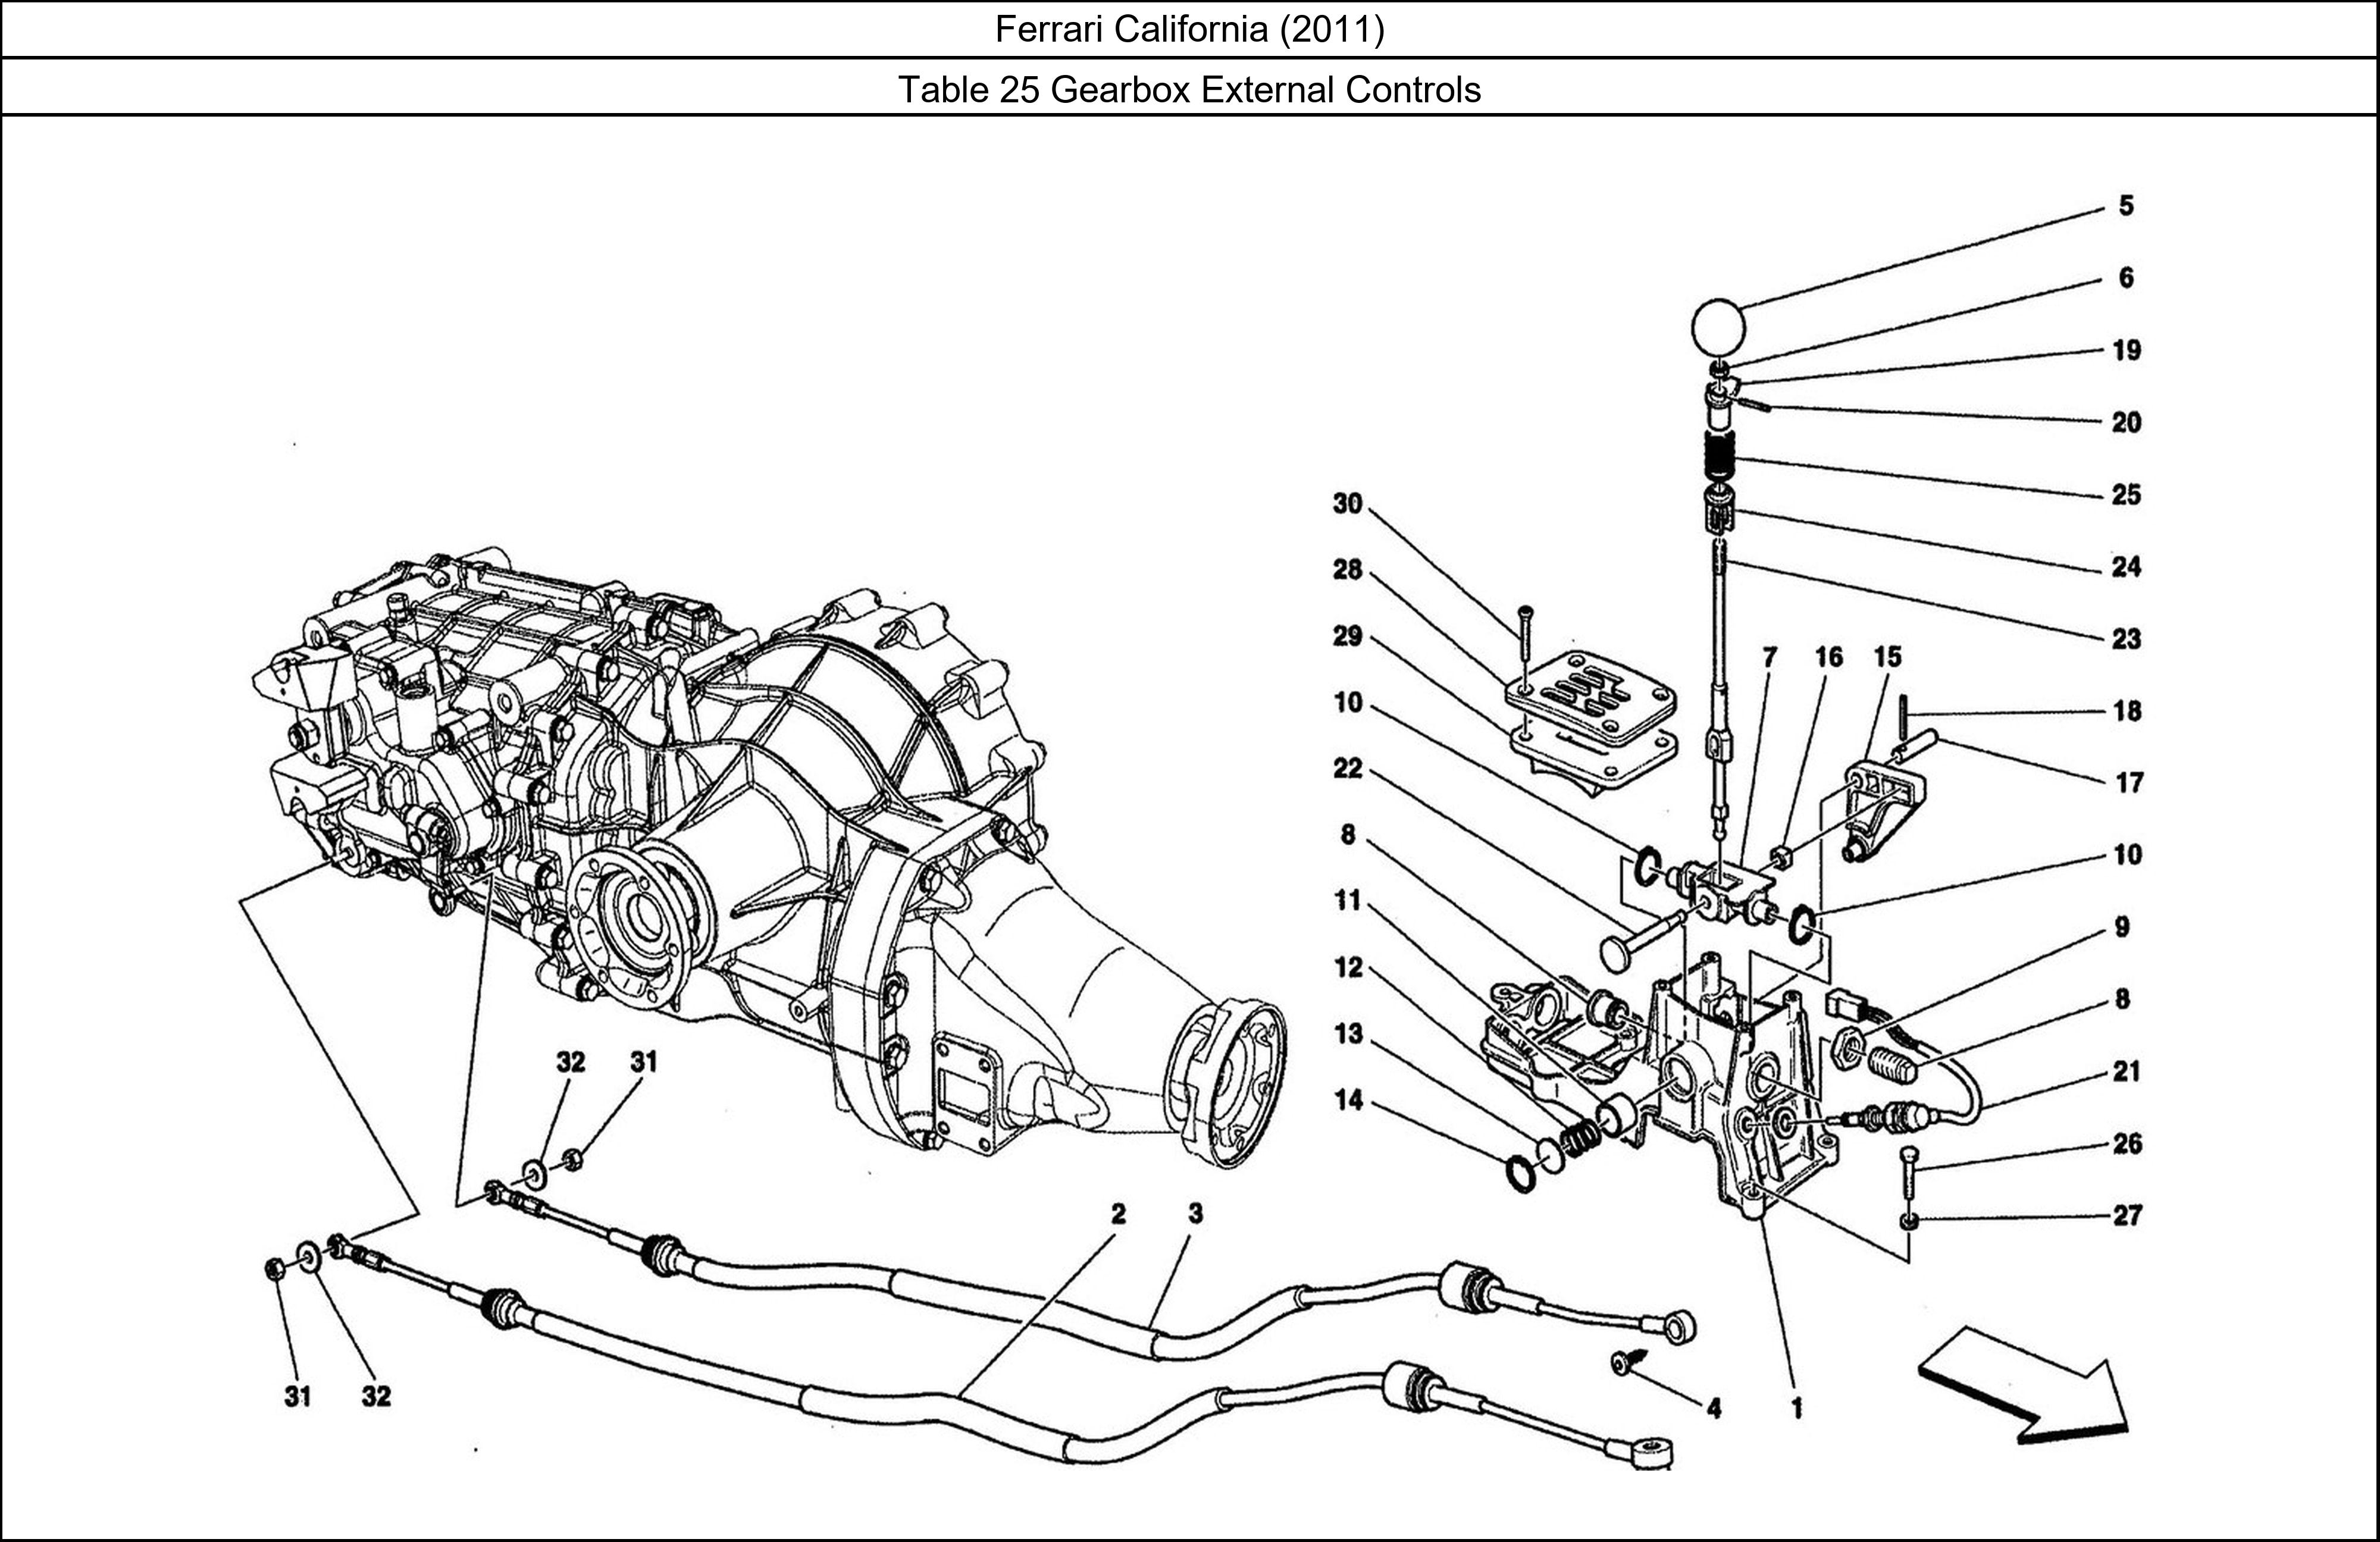 Ferrari Parts Ferrari California (2011) Table 25 Gearbox External Controls